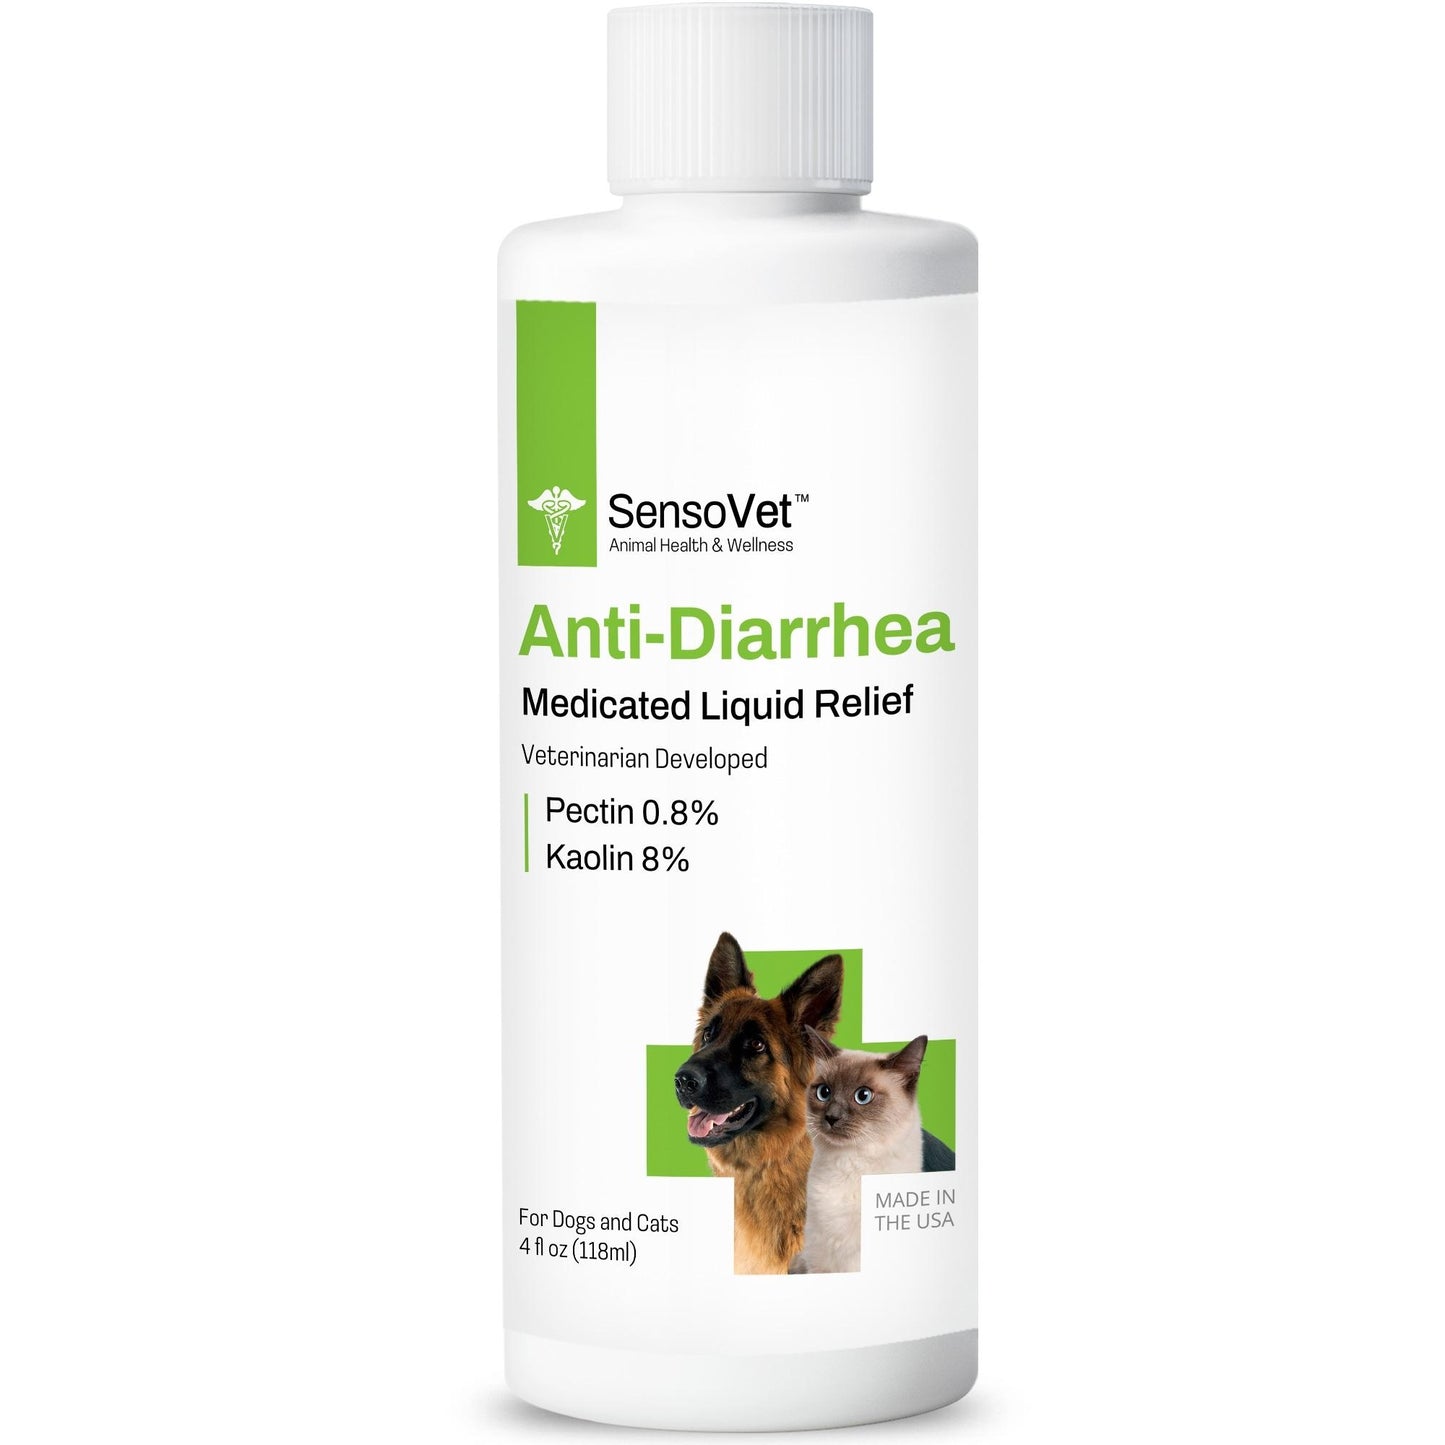 sensovet anti diarrhea relief liquid for dogs and cats